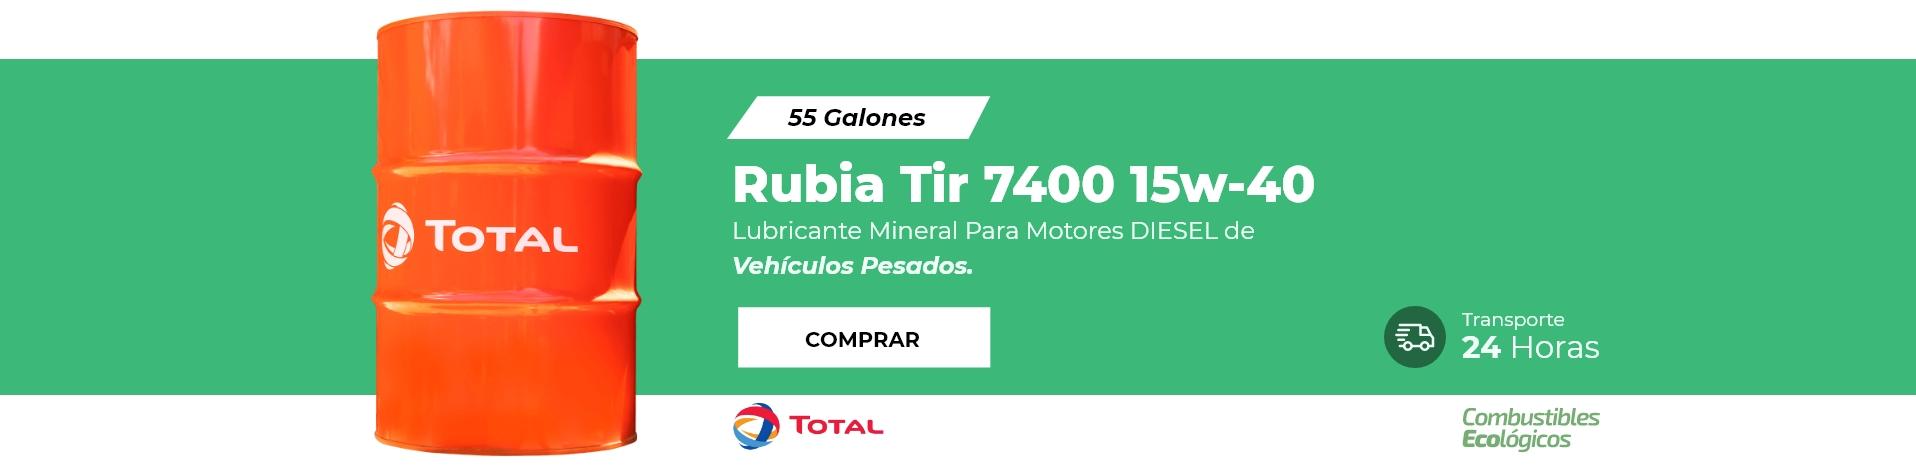 Rubia Tir 7400 15w-40  -  Combustible Ecológicos